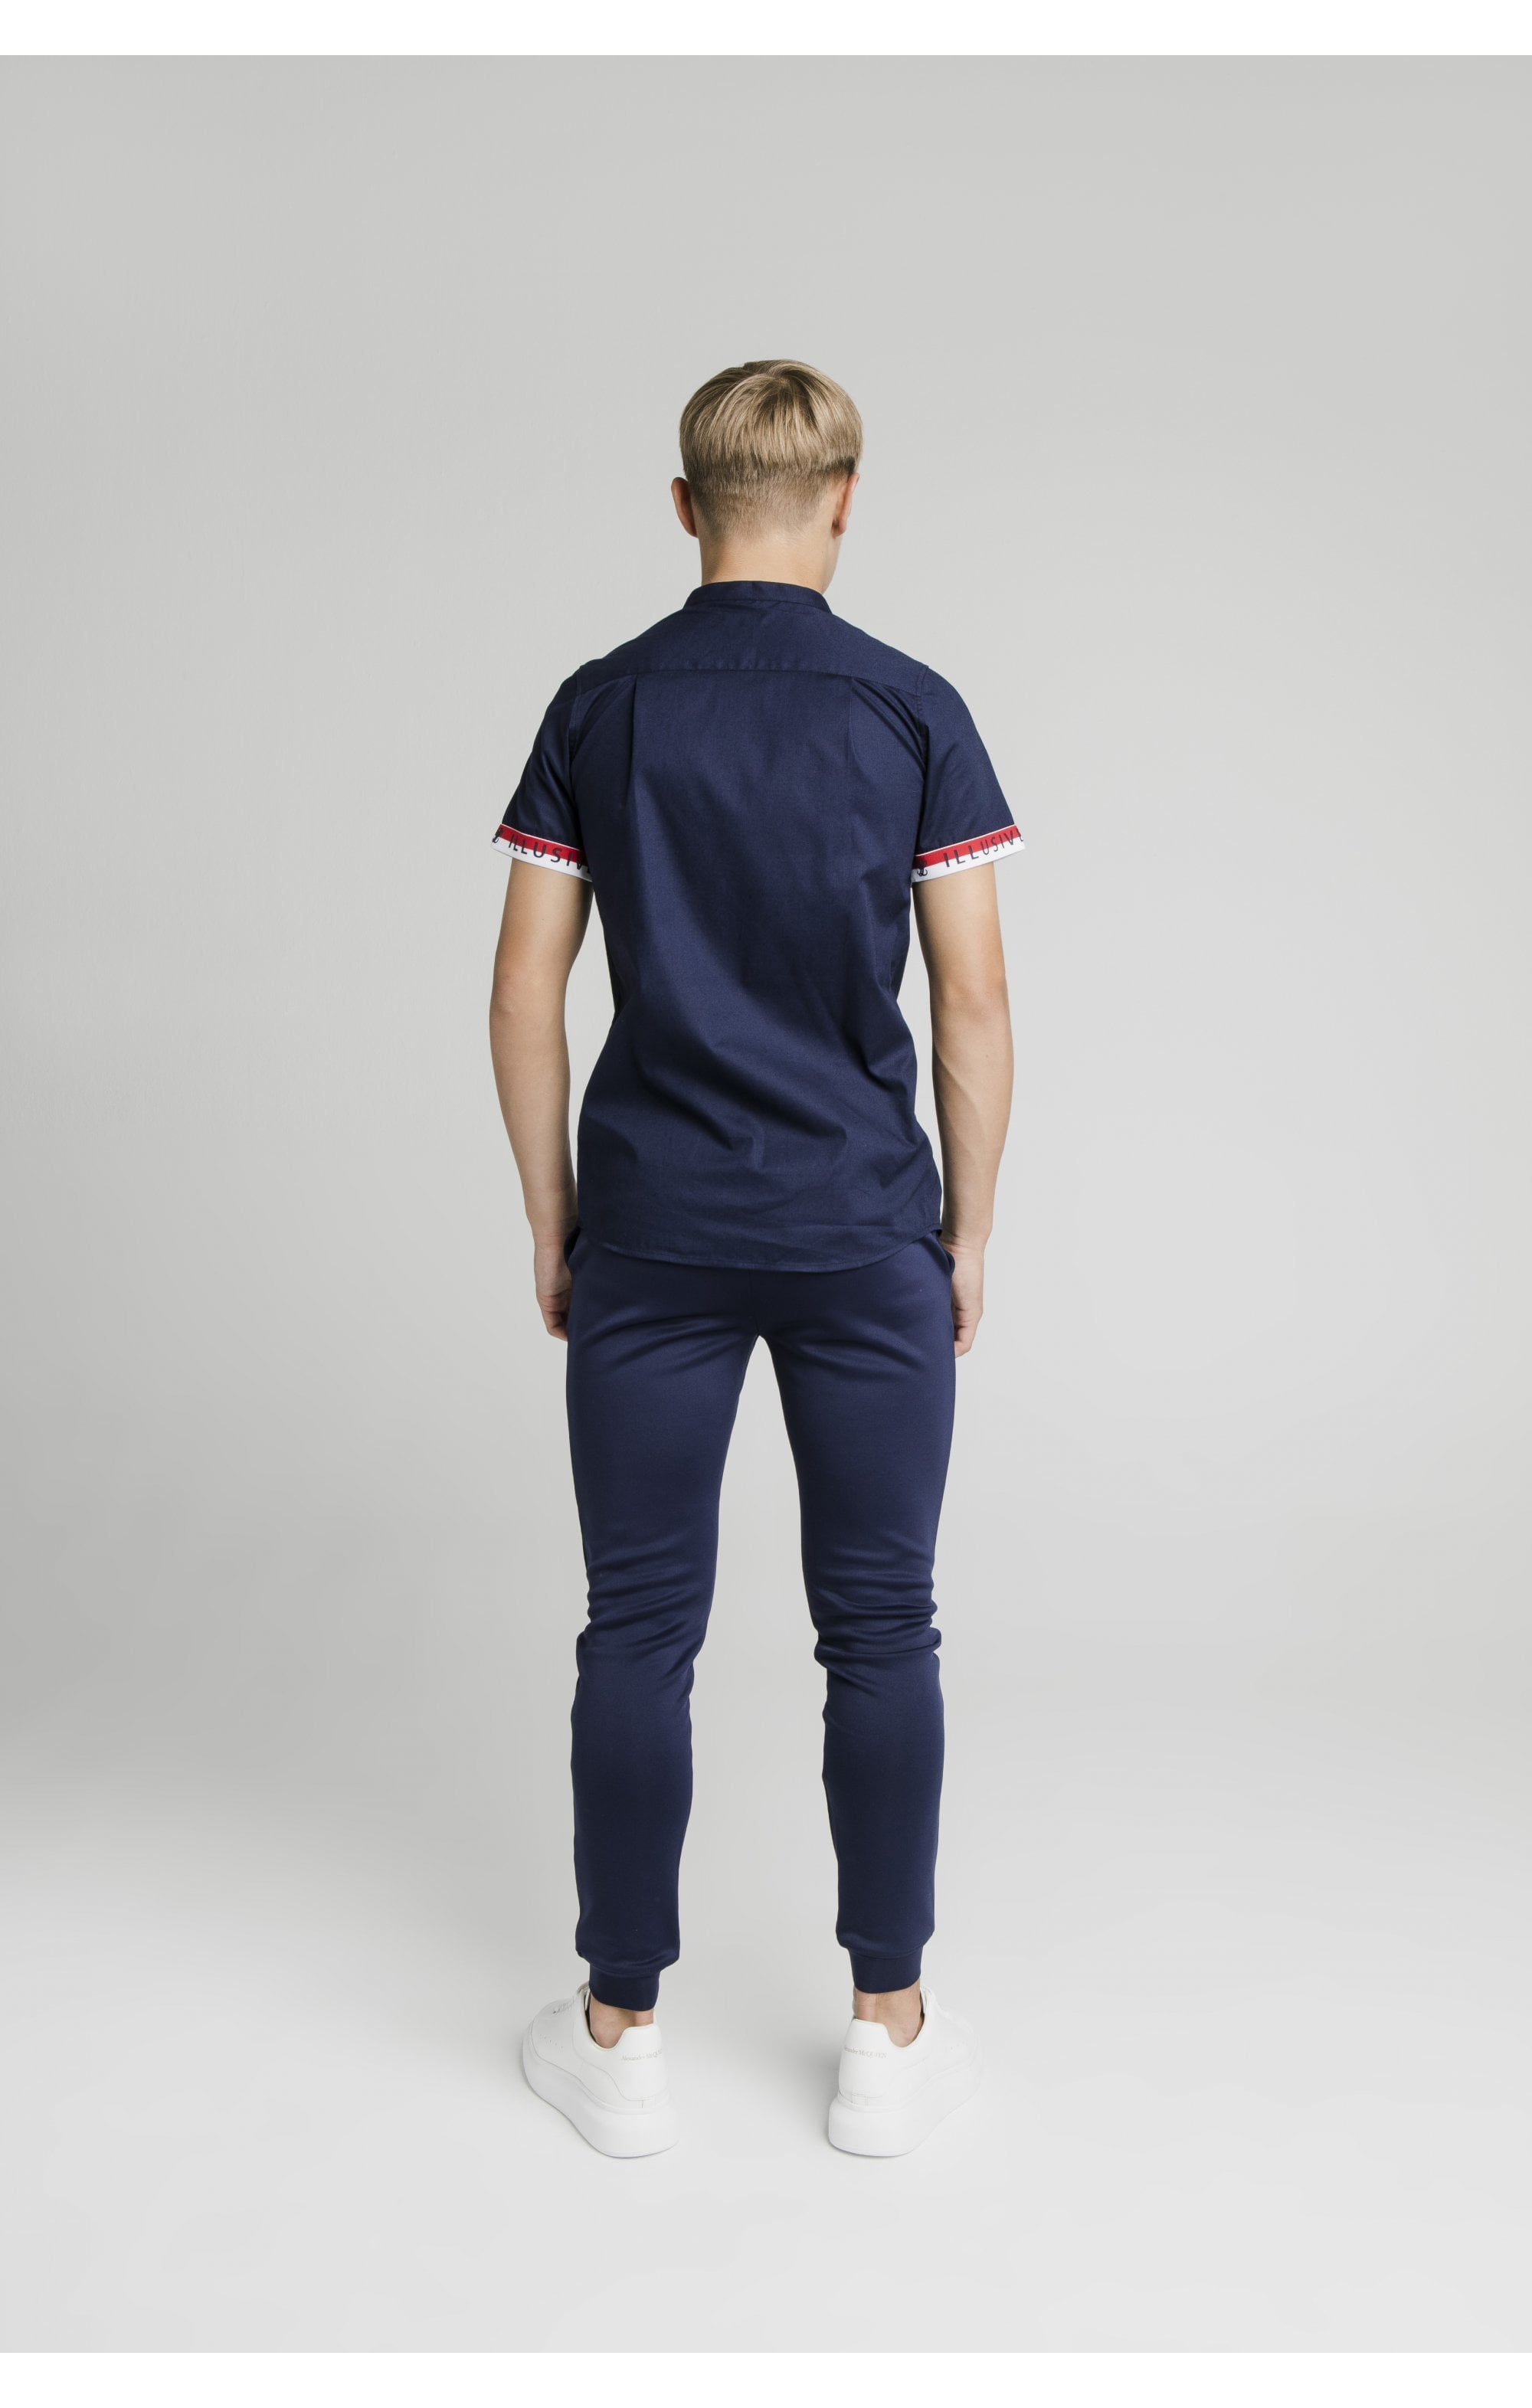 Illusive London S/S Tech Shirt - Navy (4)